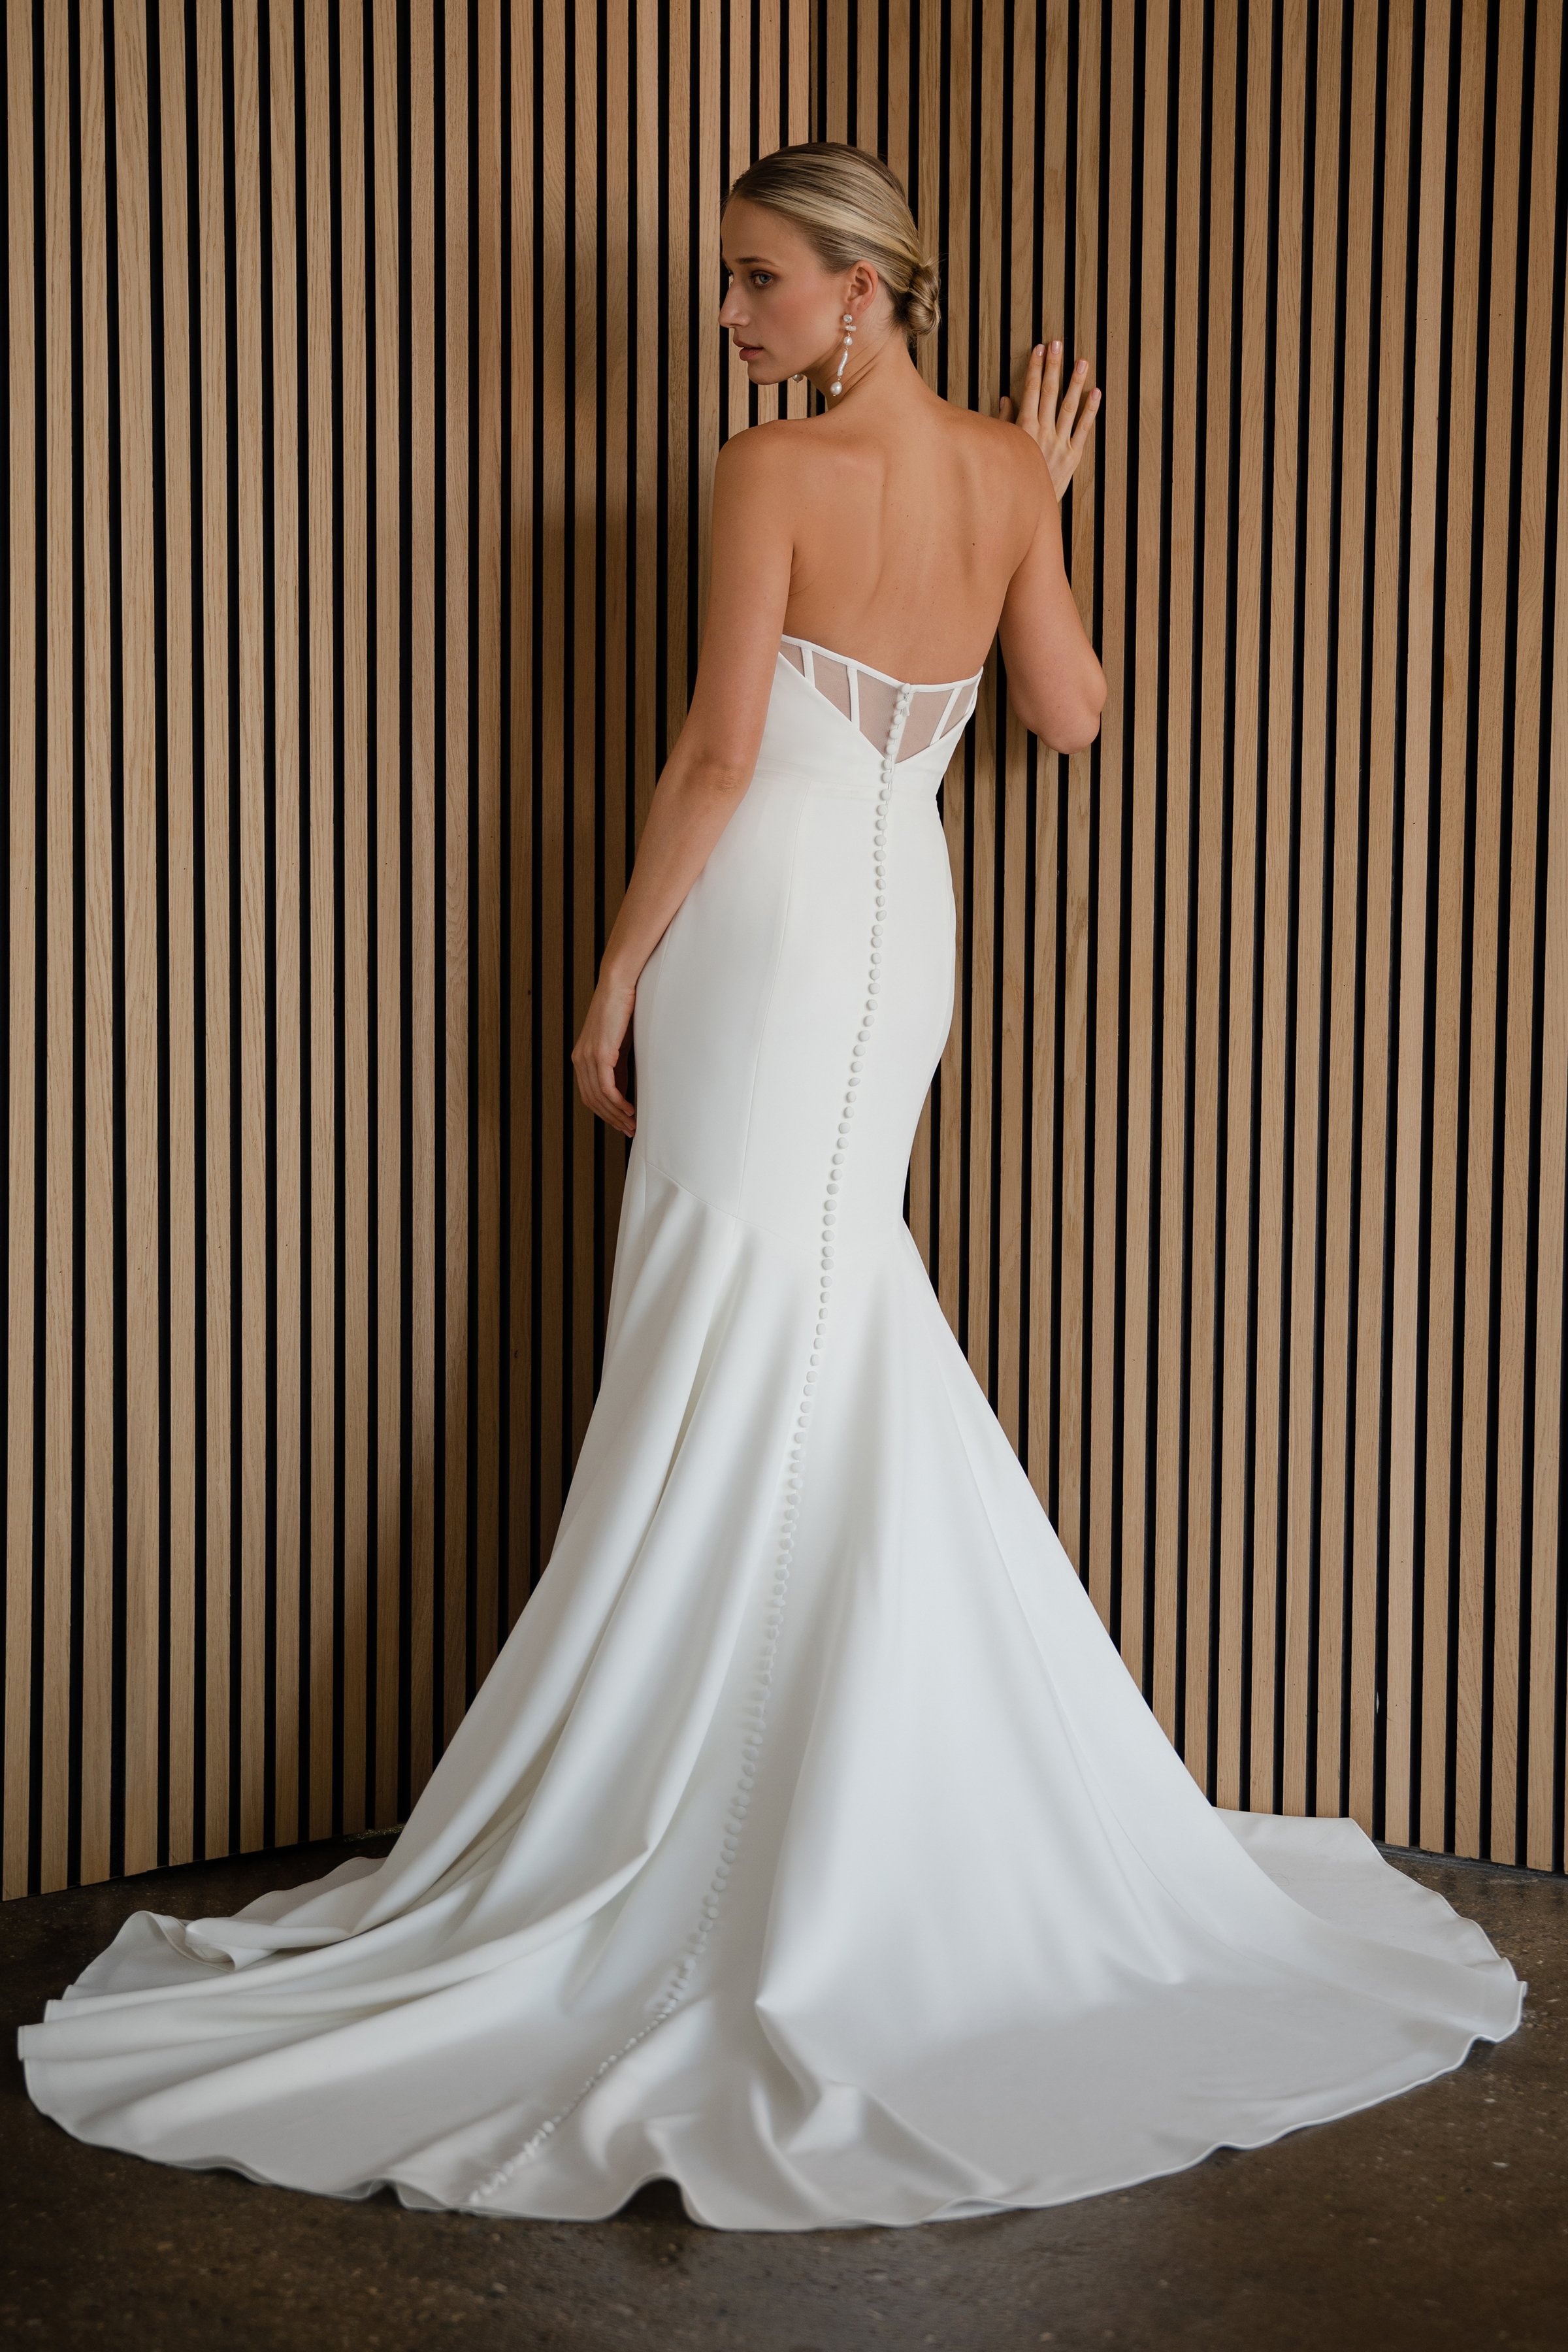 blanc-de-blanc-bridal-boutique-pittsburgh-cleveland-dress-wedding-gown-jenny-yoo-watson-back.jpg